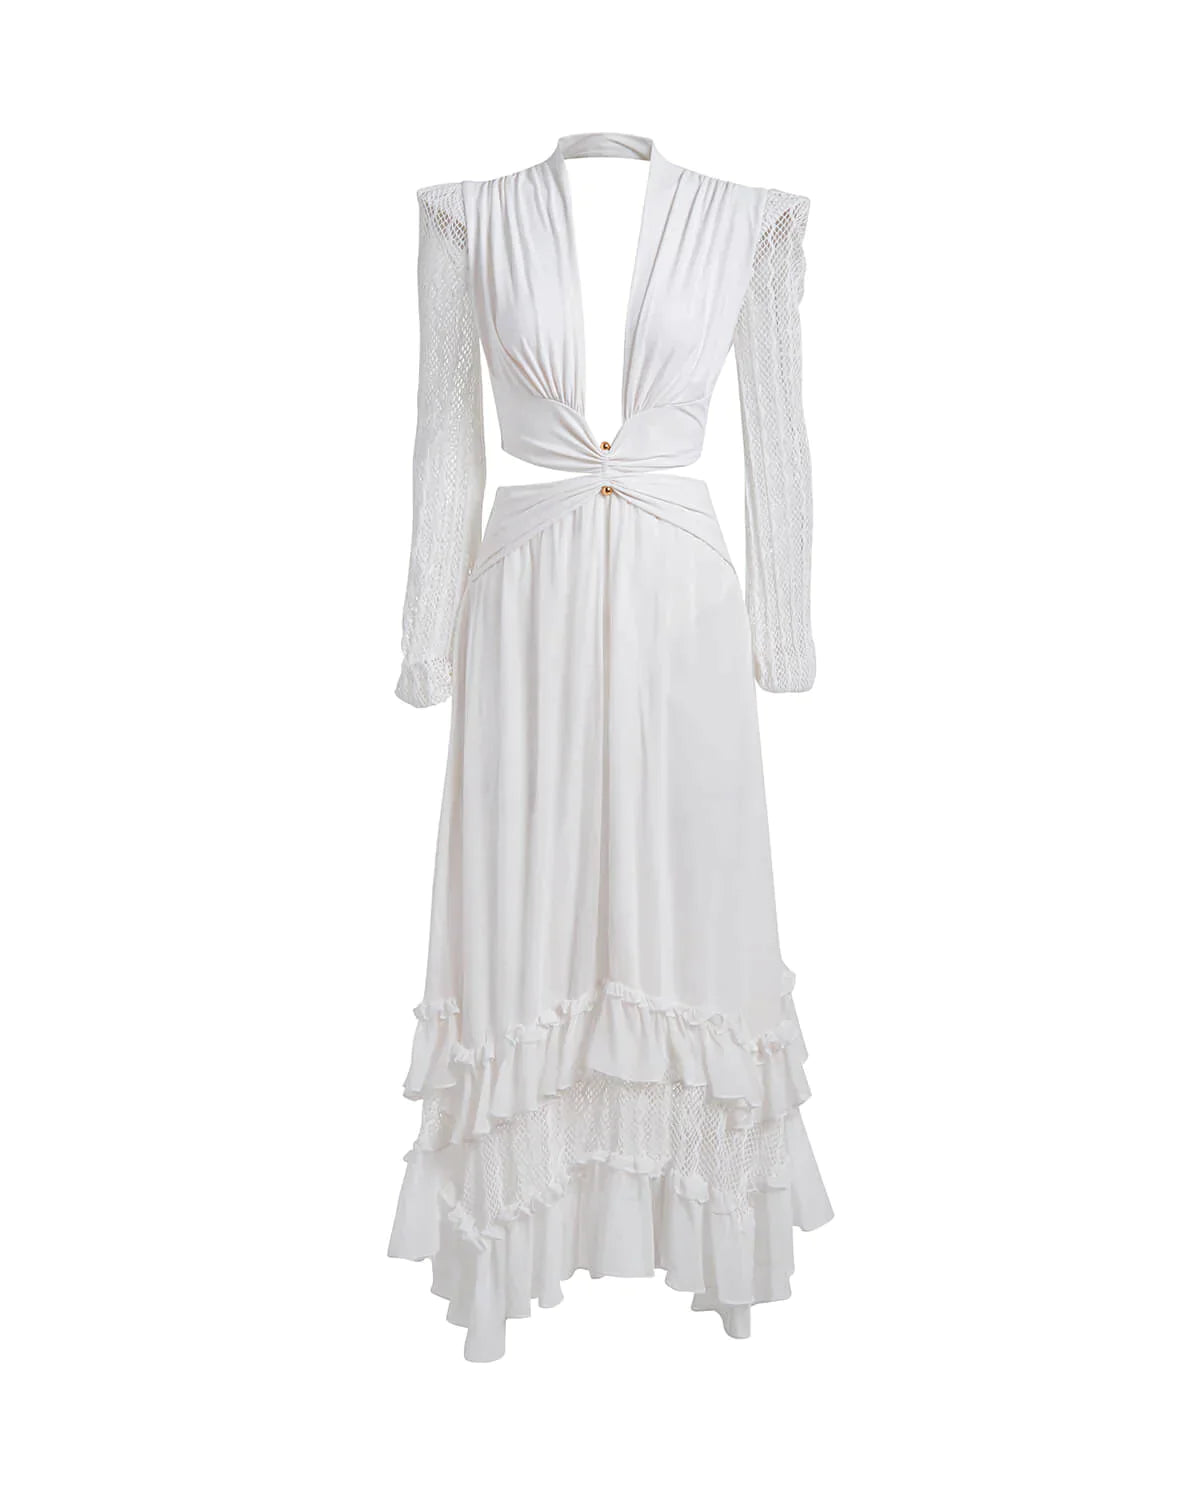 PatBo Plunge lace Sleeve Maxi Dress - Premium Long dress from Marina St Barth - Just $725.00! Shop now at Marina St Barth